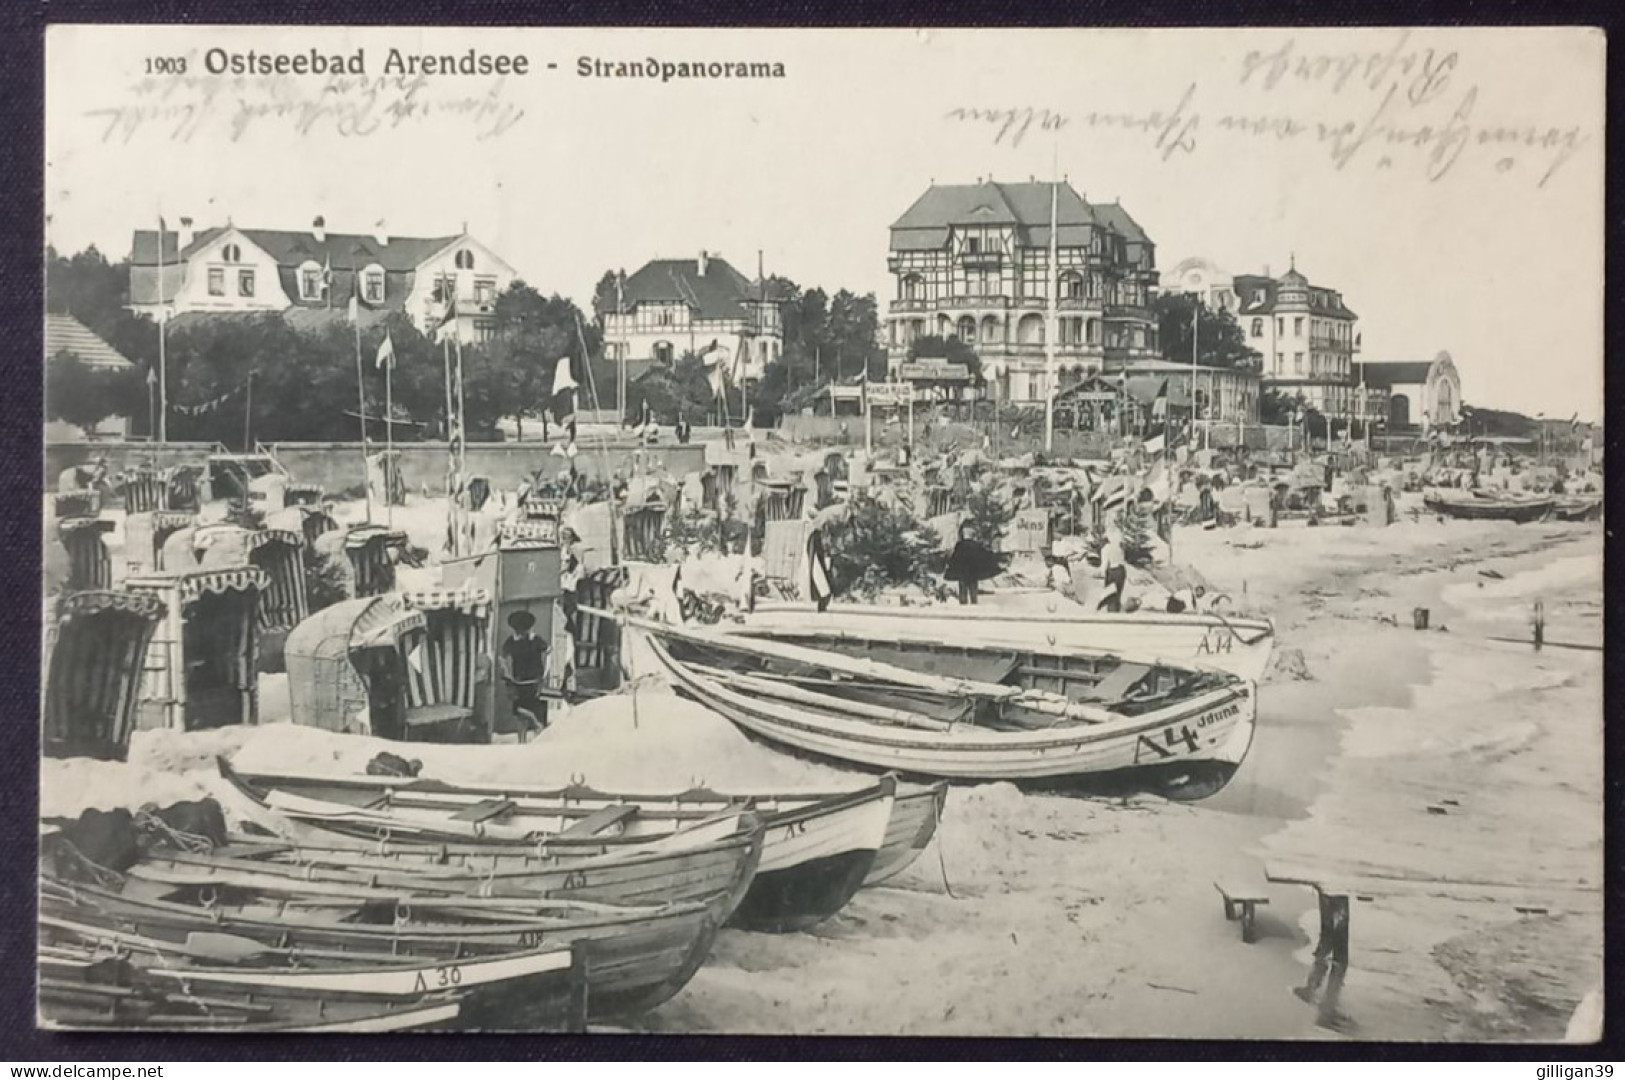 Kühlungsborn, OSTSEEBAD ARENDSEE, Strandpanorama, 1914 Gelaufen - Kuehlungsborn